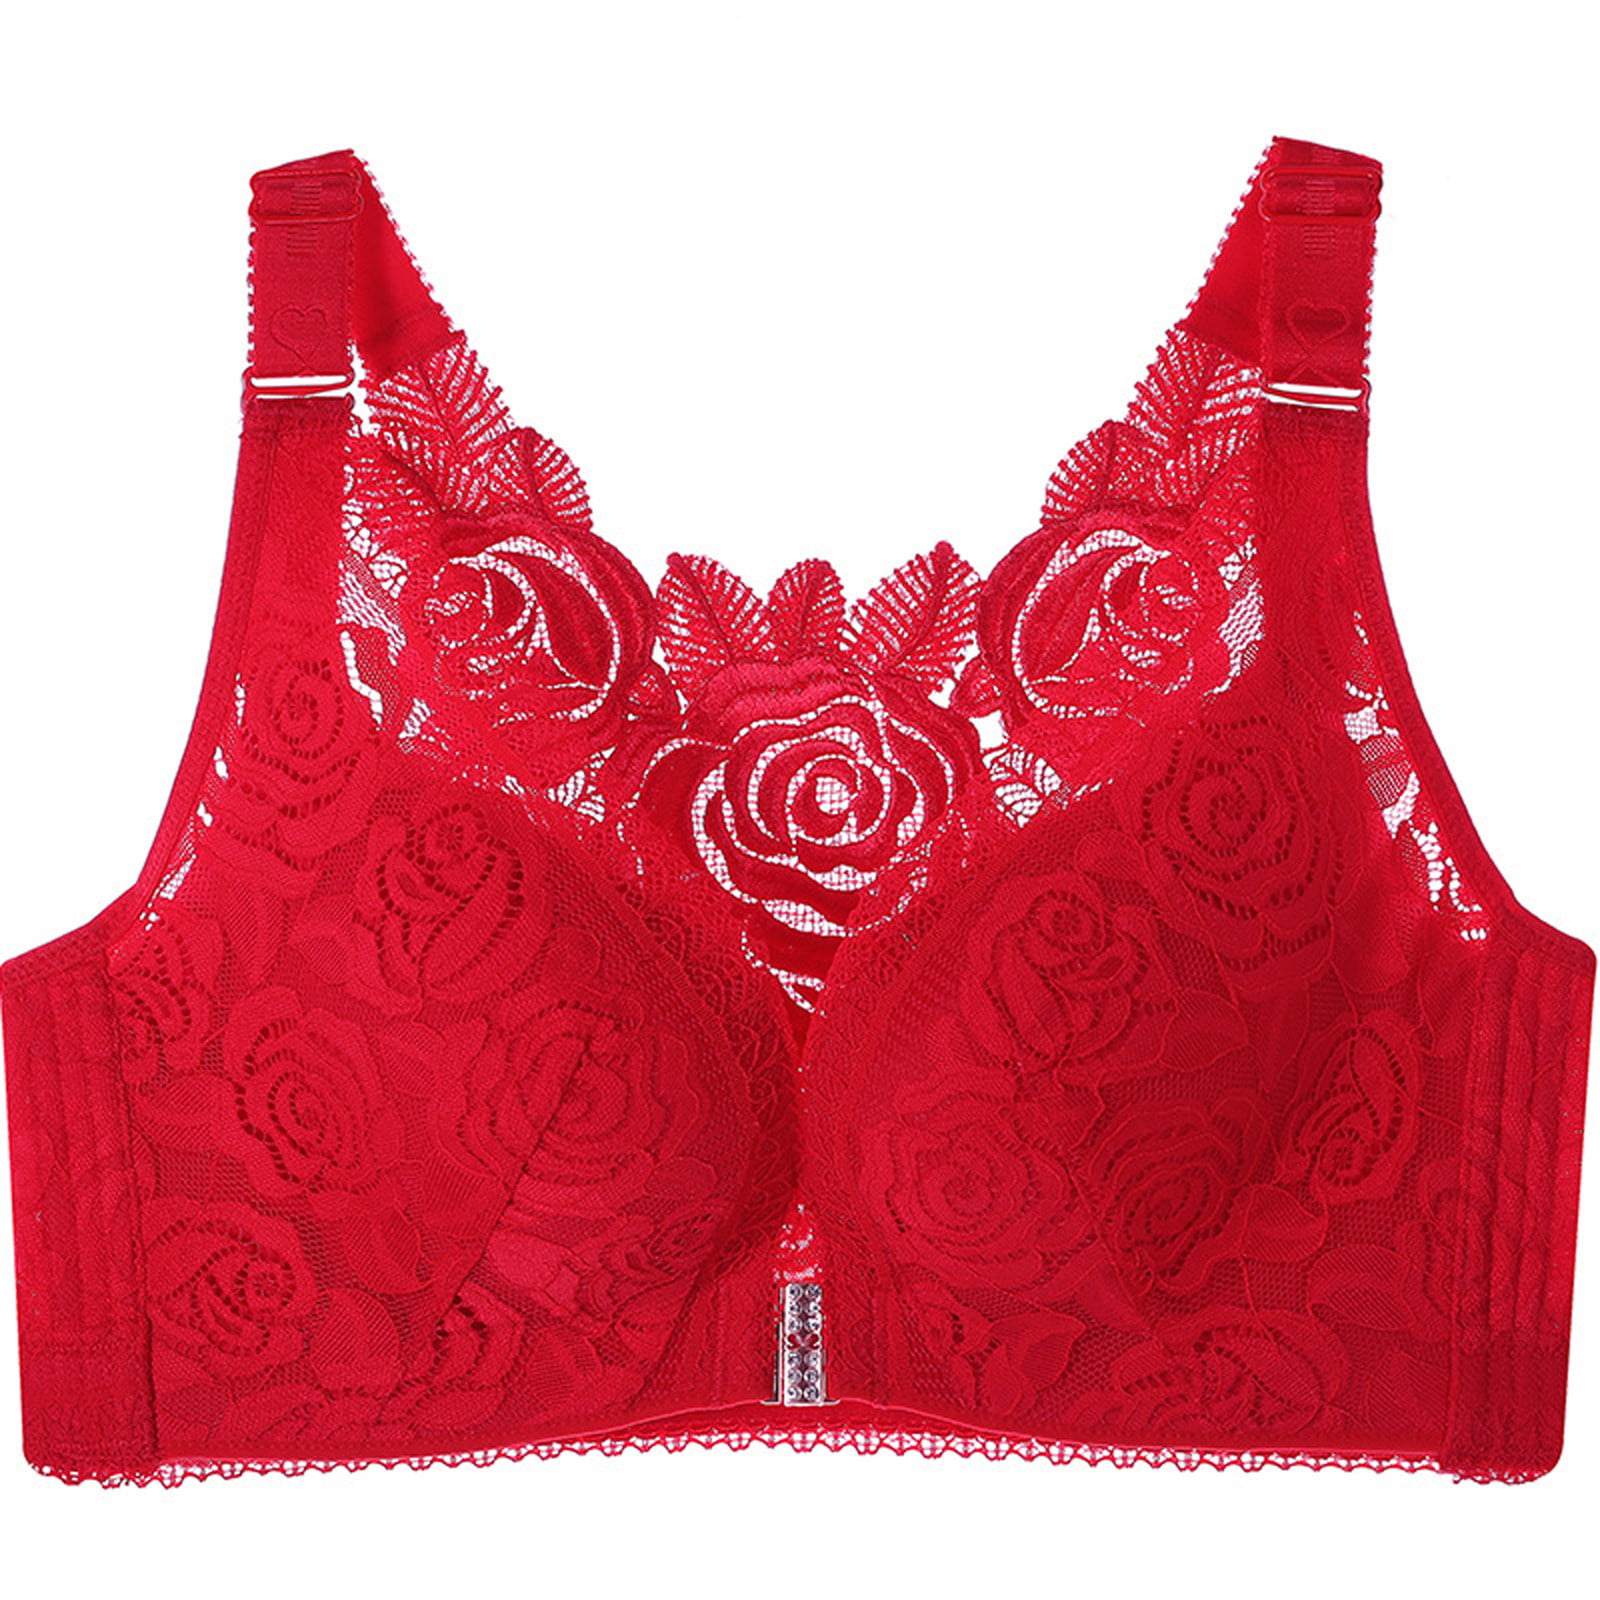 Avenue Body  Women's Plus Size Lace Detail Underwire Bra - Red Bud - 48g :  Target